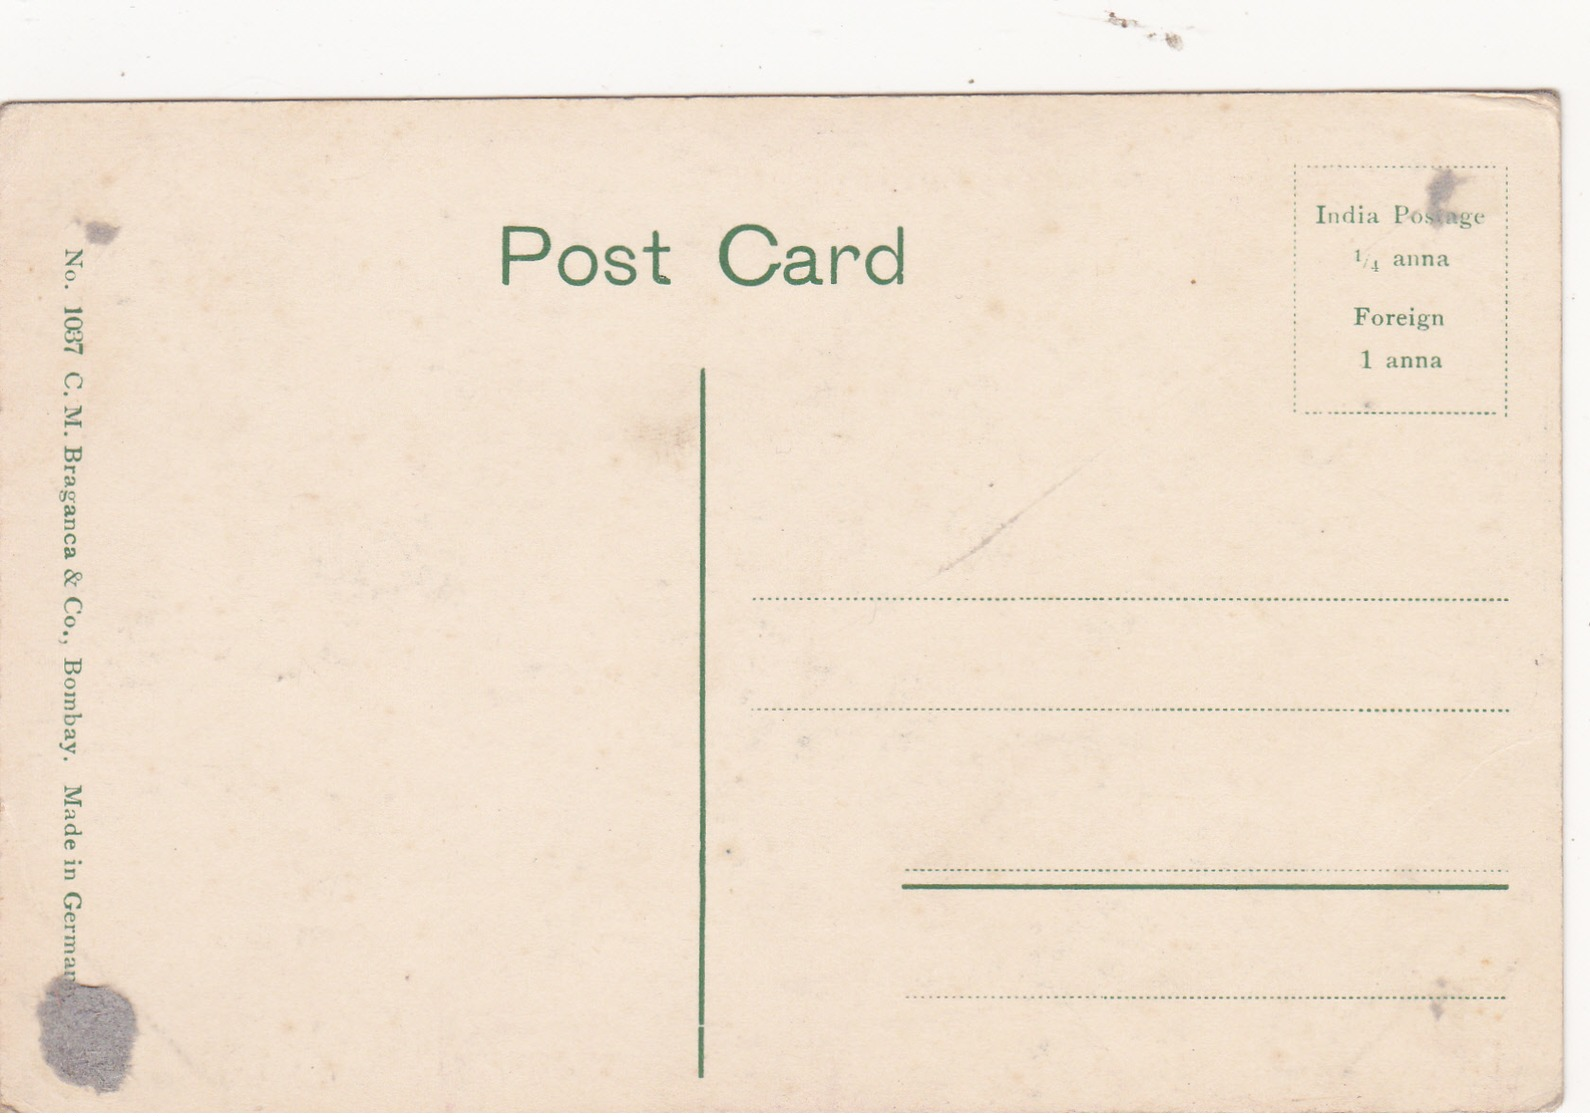 Small Postcard Of Goa Portuguese Association Hall,Karāchi, Sindh, Pakistan,ex India, Q90. - Pakistan